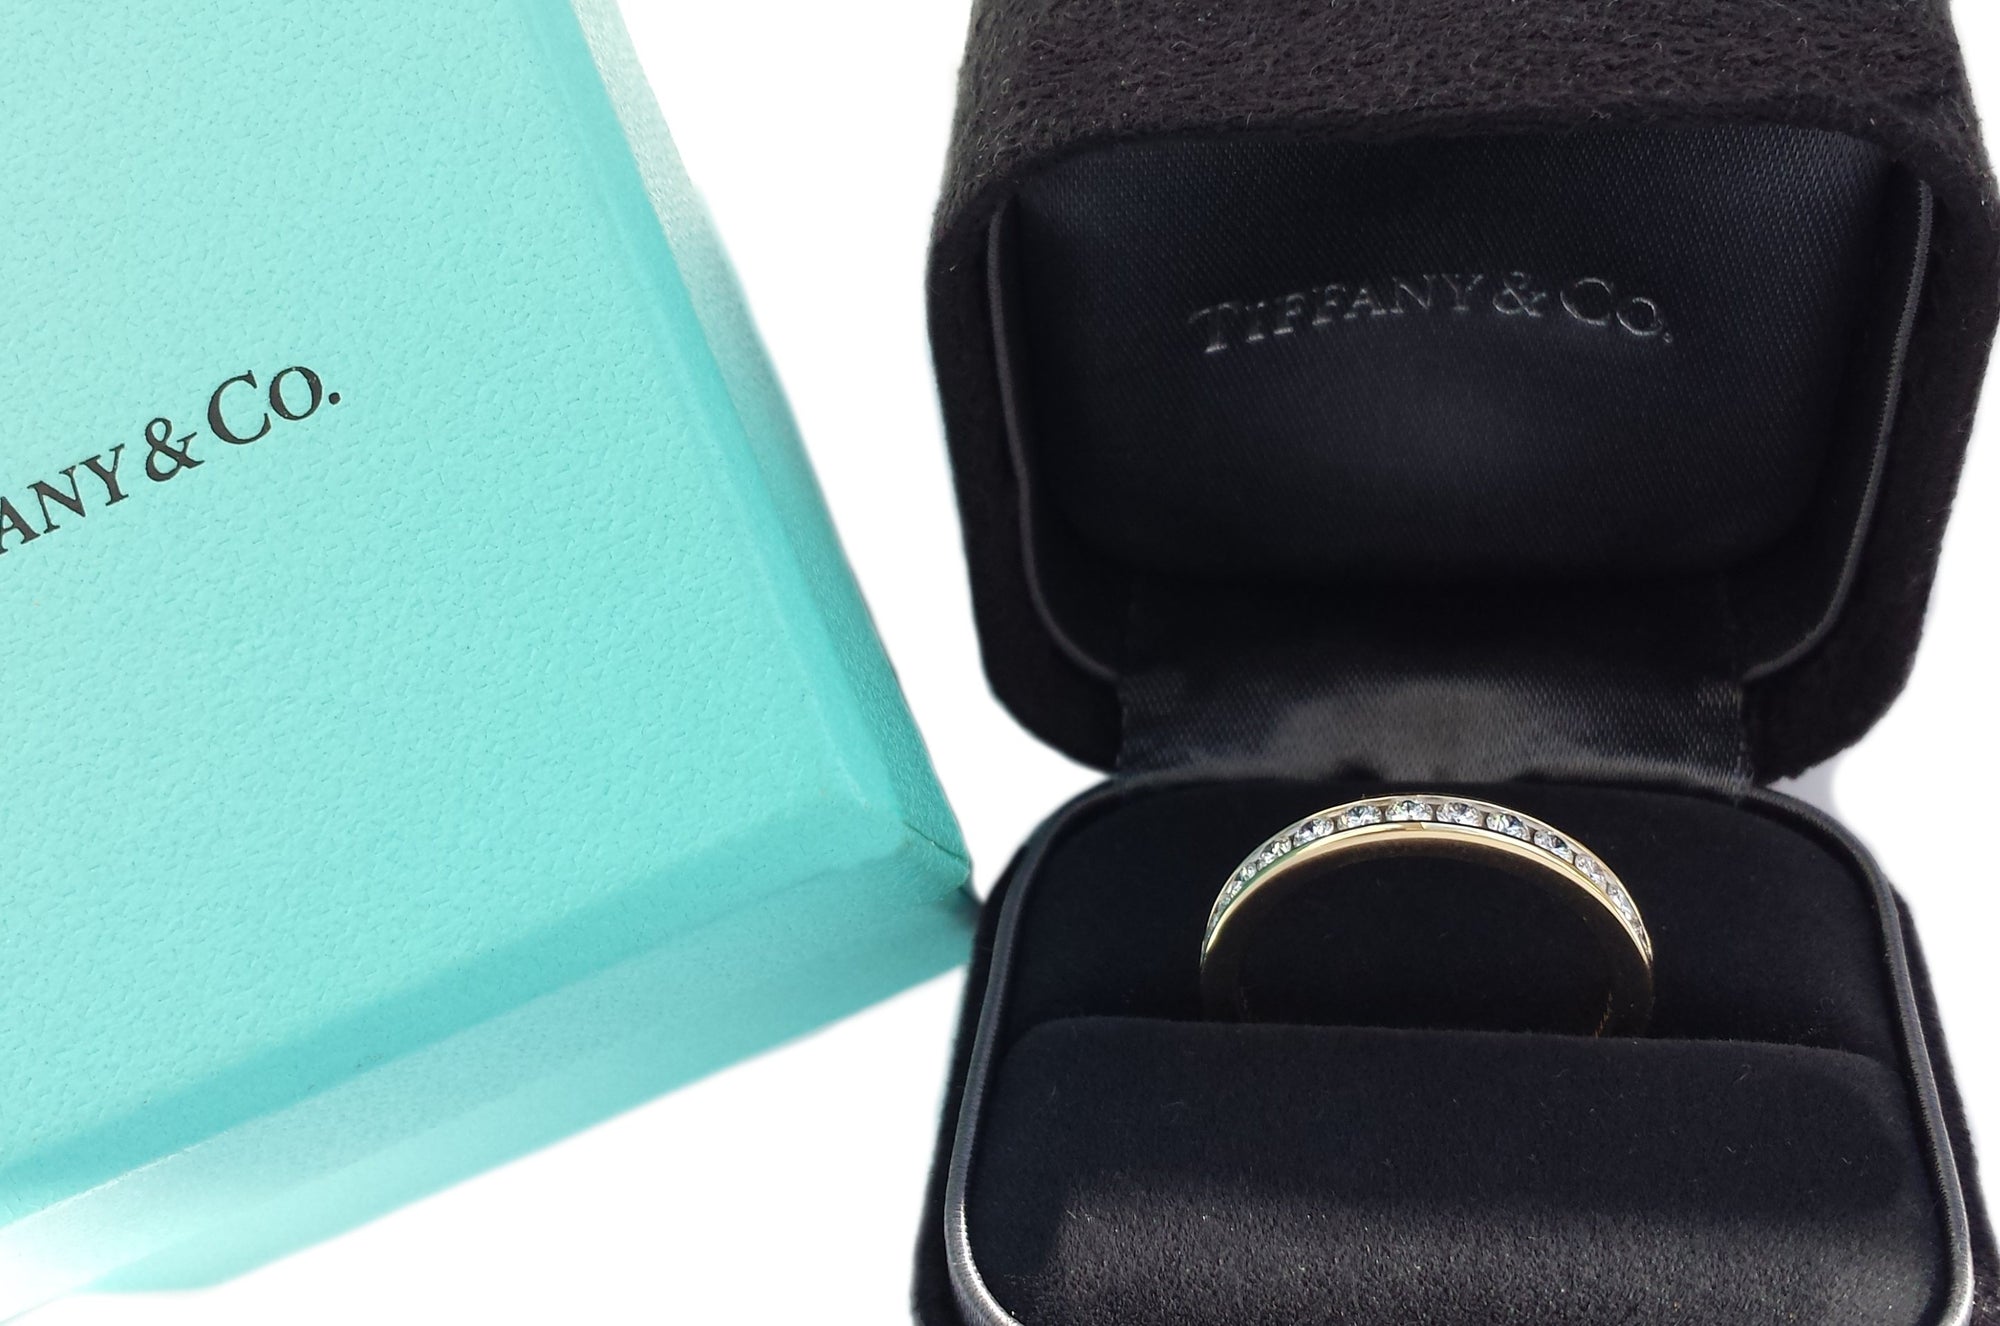 Tiffany & Co 3mm .33ct Diamond Channel Set 750 Wedding Band